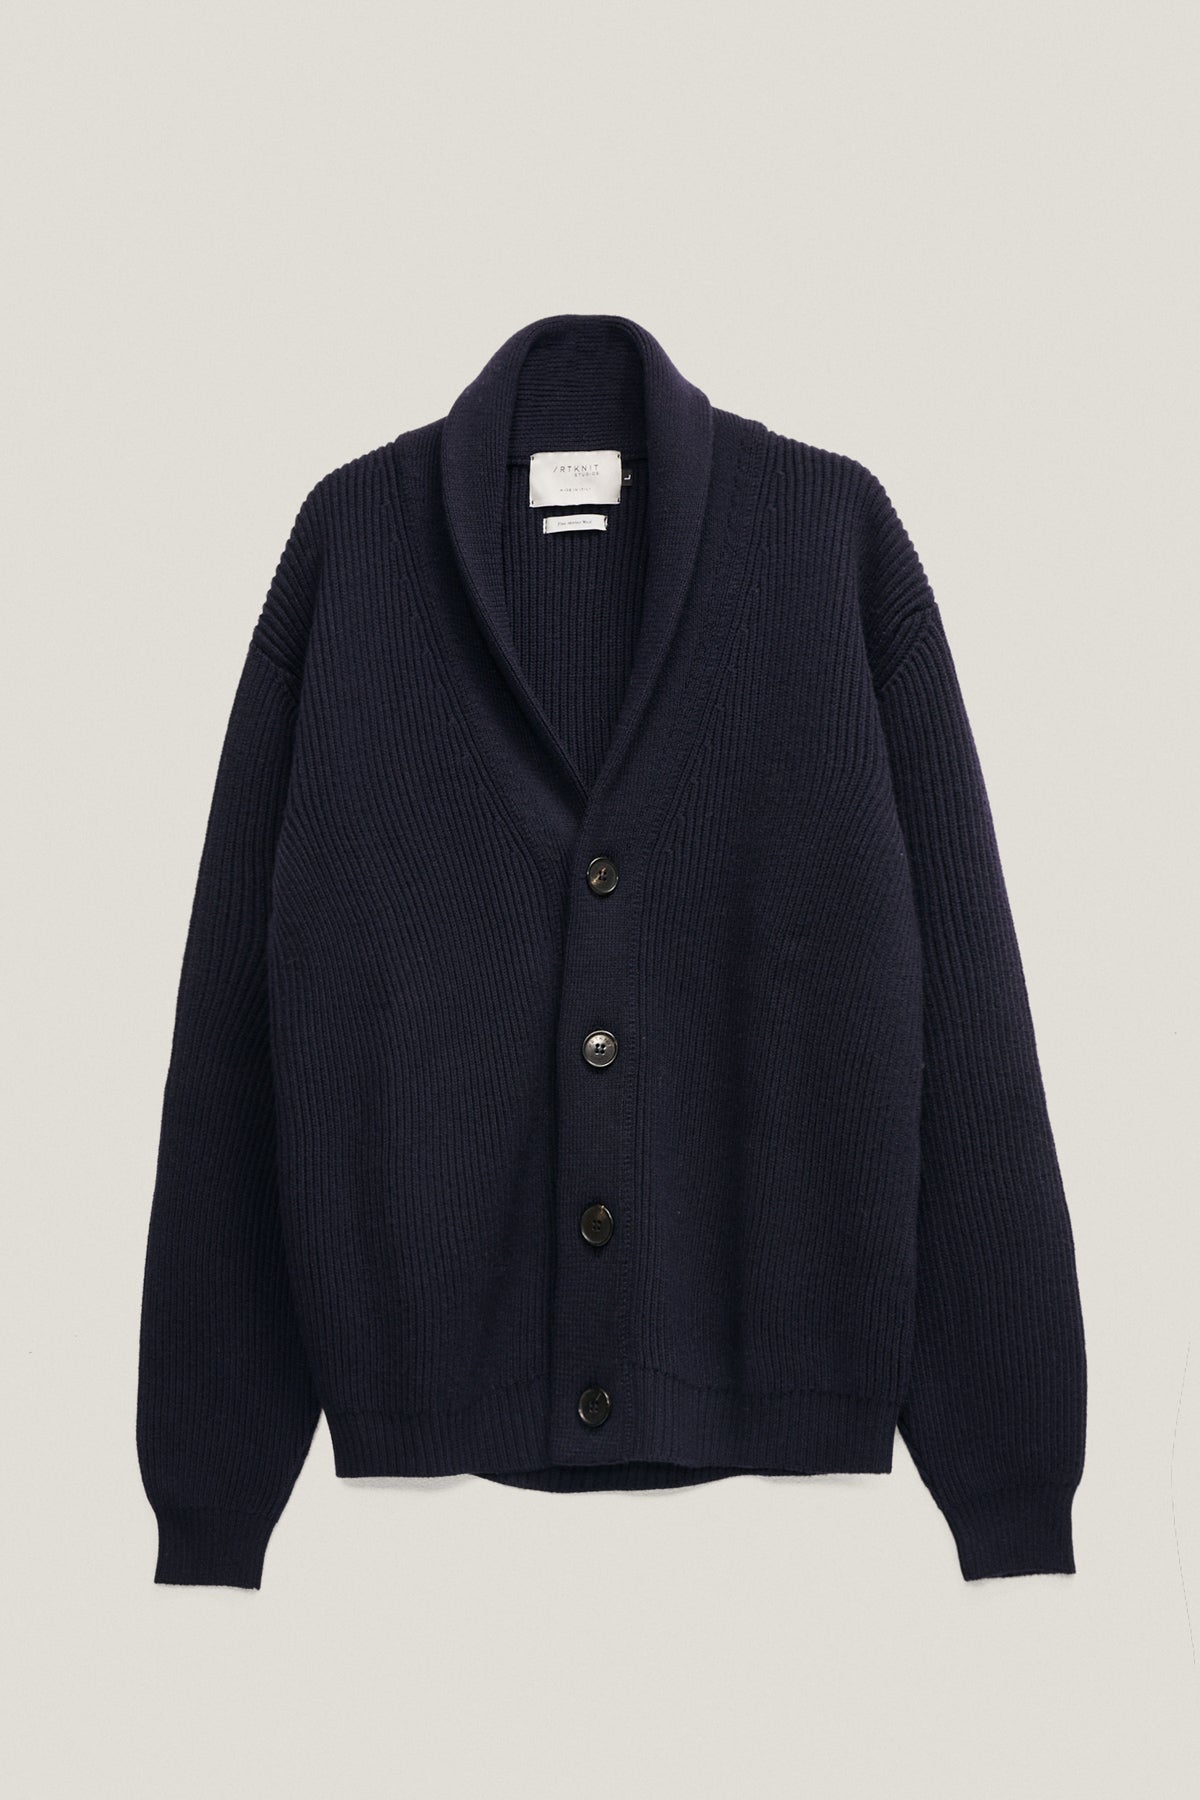 Oxford Blue | The Merino Wool Shawl Cardigan